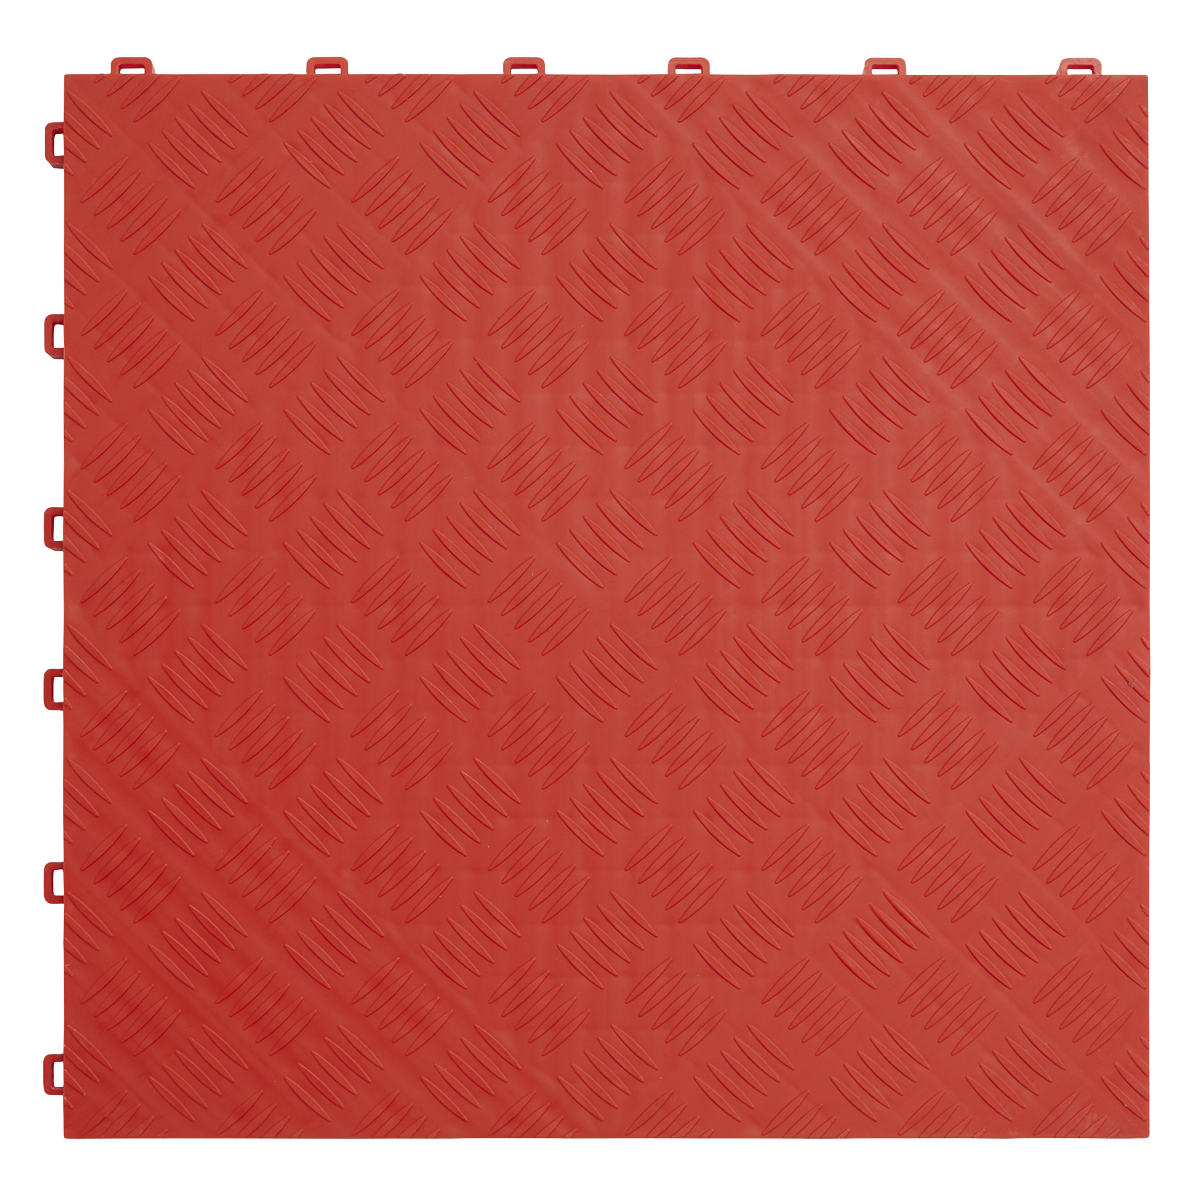 Polypropylene Floor Tile 400 x 400mm - Red Treadplate - Pack of 9 - FT3R - Farming Parts